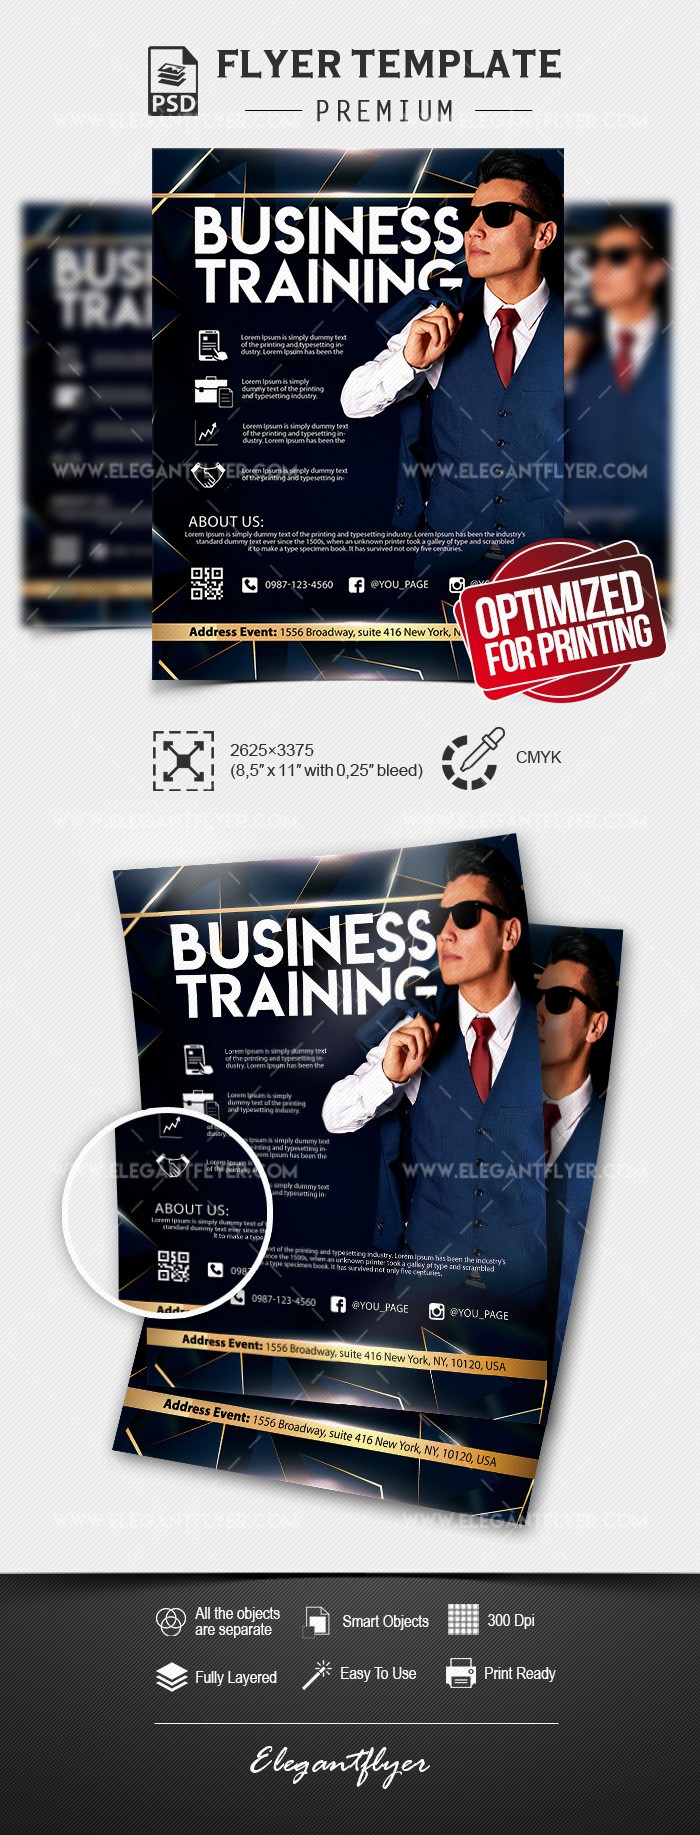 Business Training by ElegantFlyer